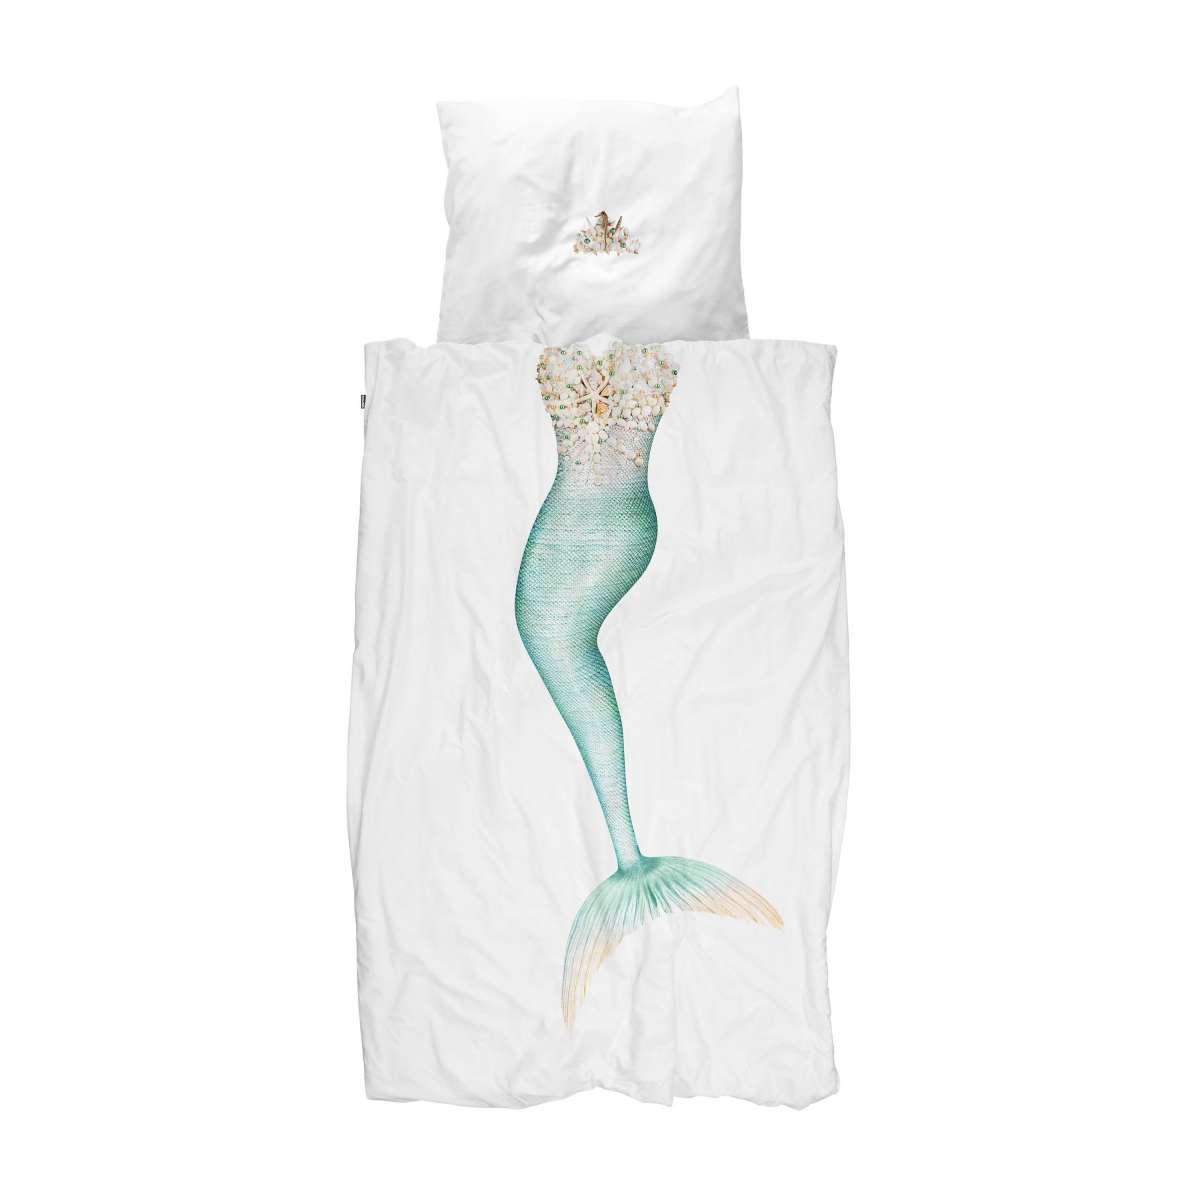 Mermaid dekbedovertrek